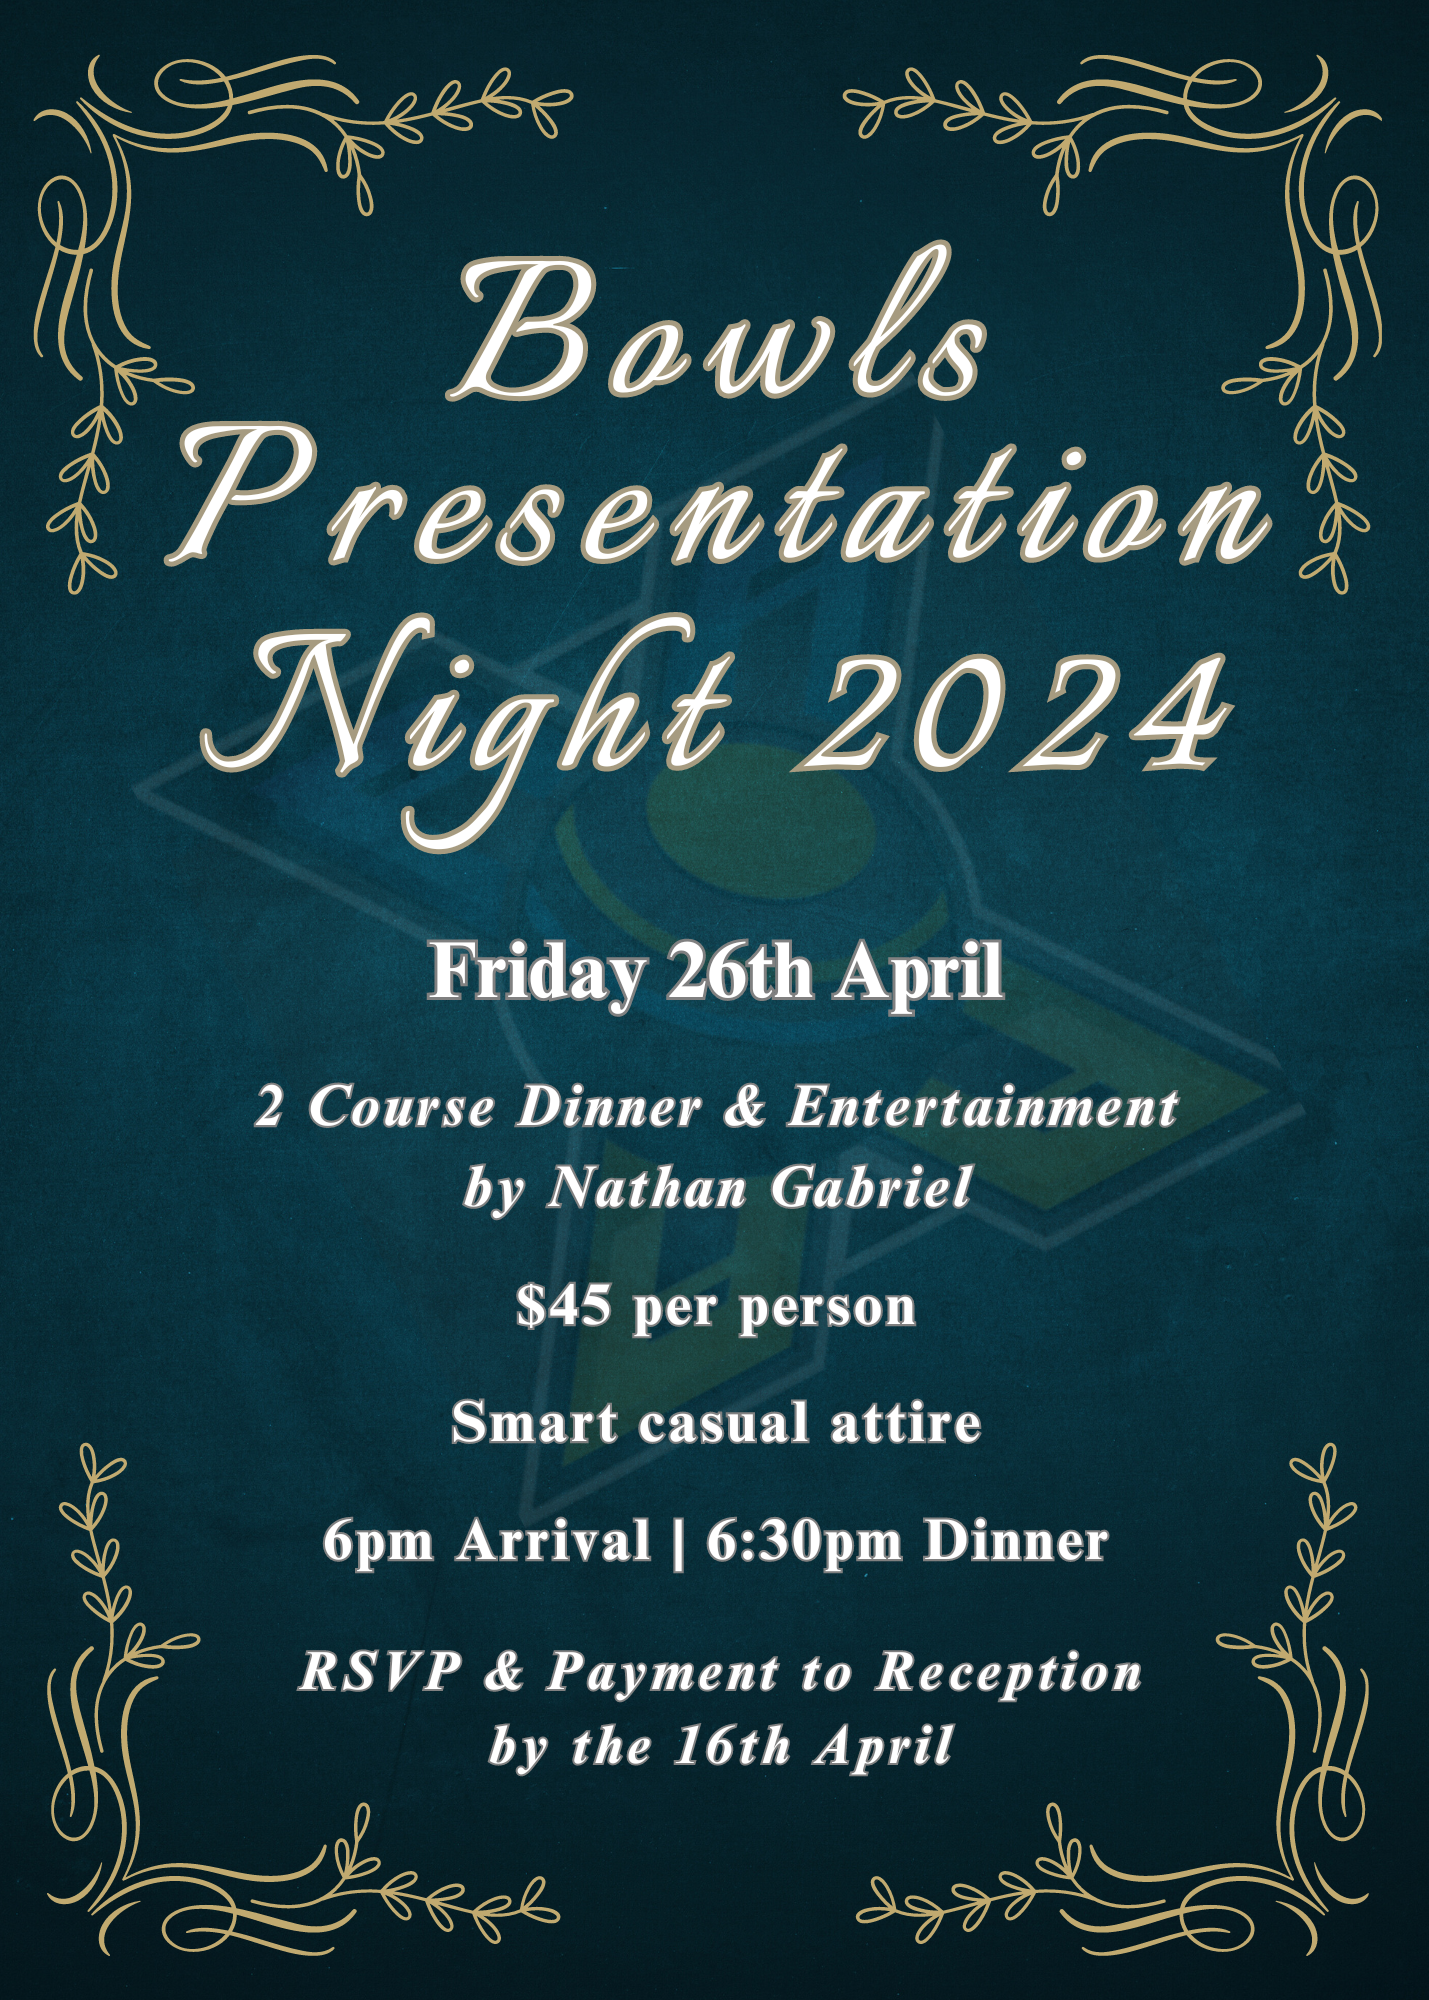 Bowls Presentation Night 2024 1